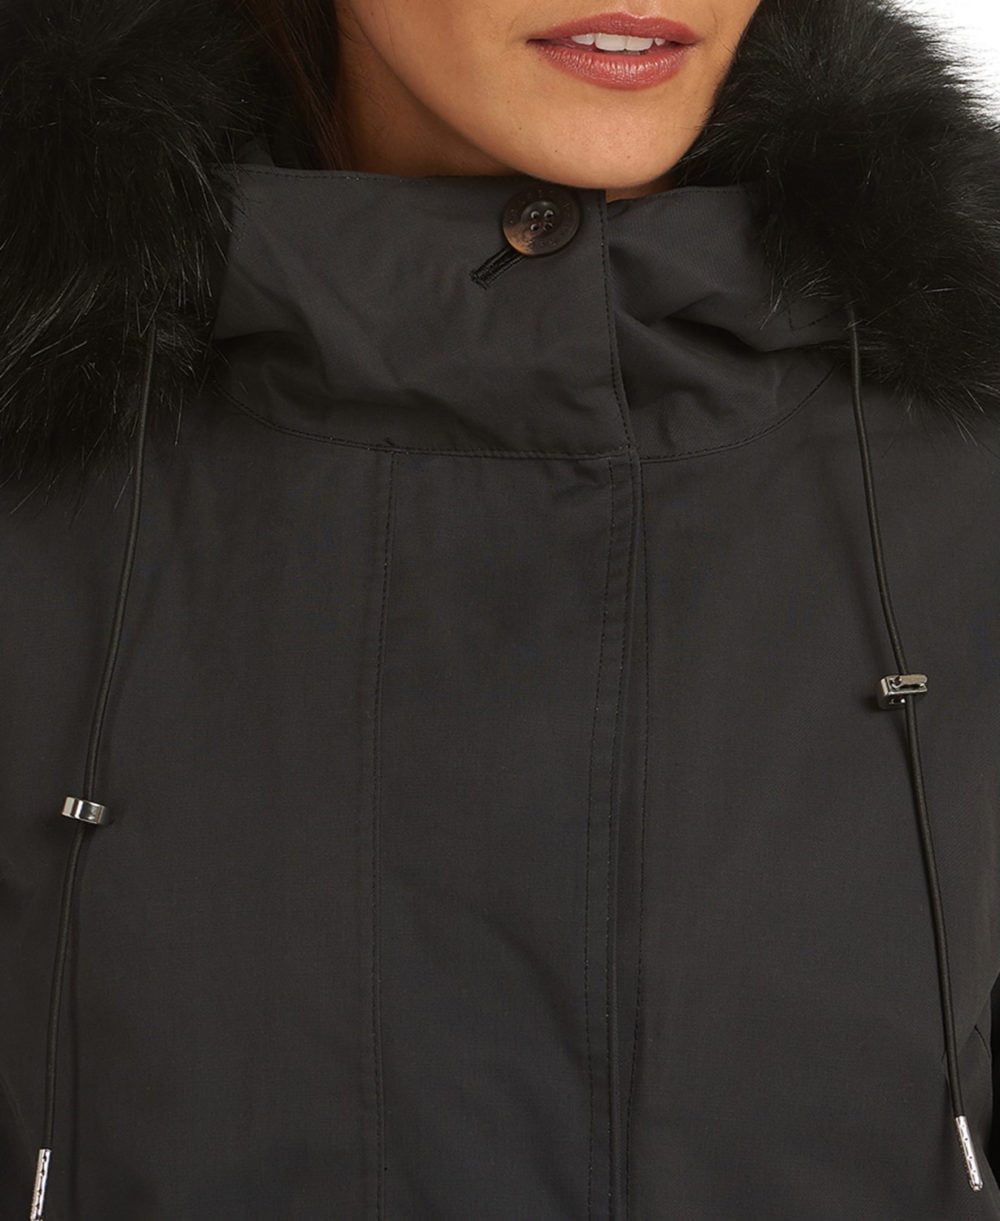 www.couturepoint.com-barbour-womens-black-braan-waterproof-hooded-parka-coat